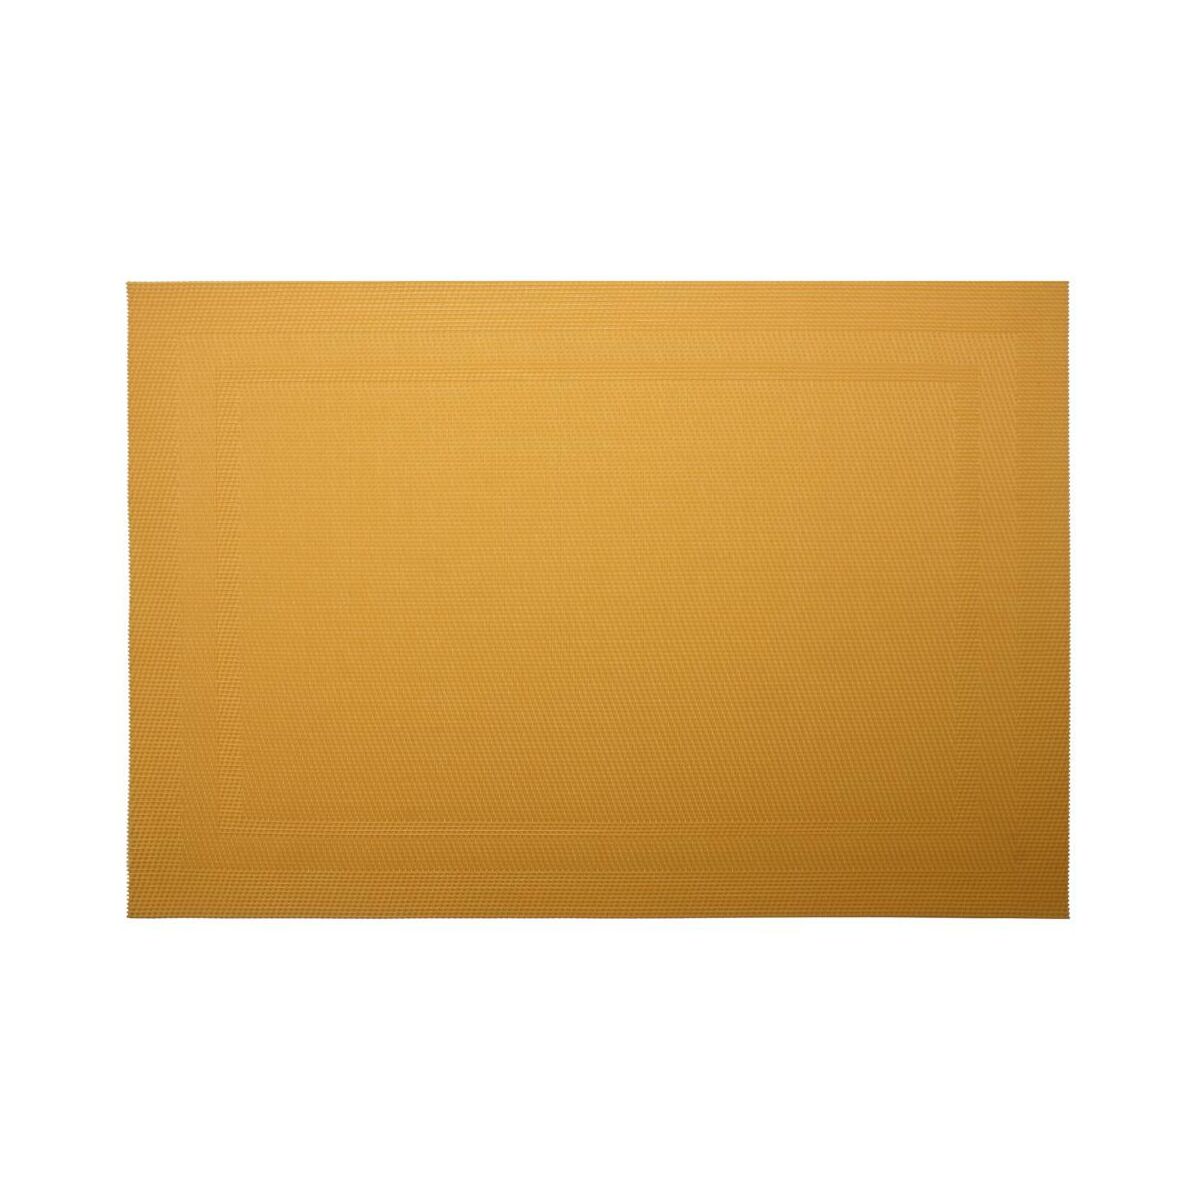 Podkładka na stół Pad prostokątna 43 x 28 cm żółta